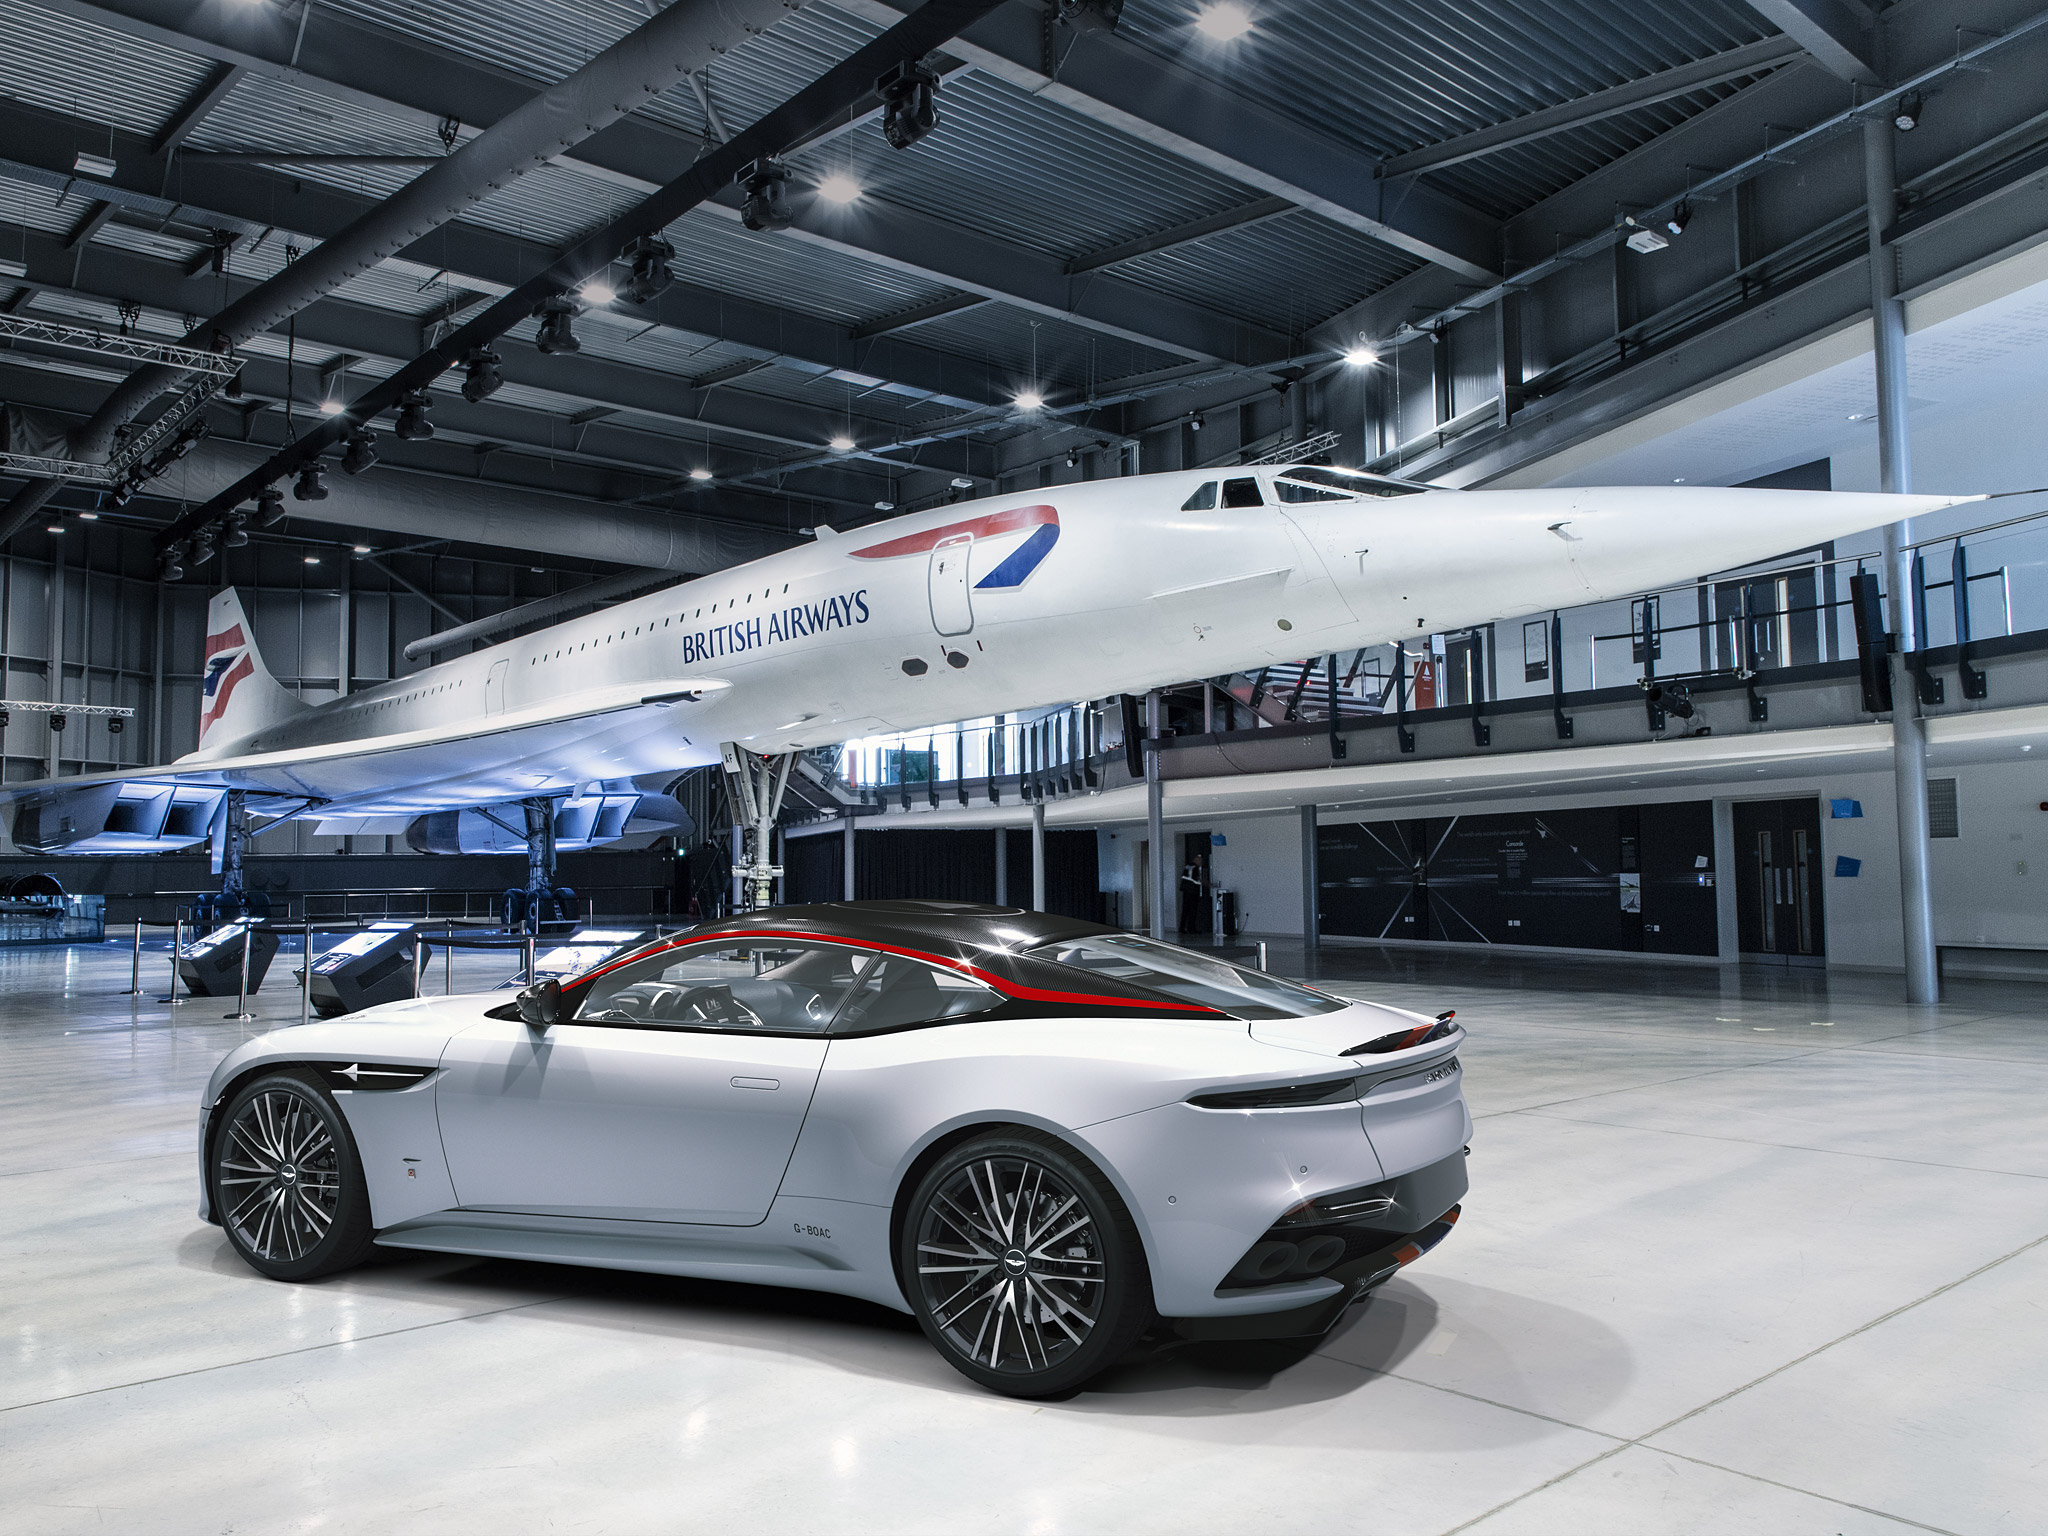  2019 Aston Martin DBS Superleggera Concorde Edition= Wallpaper.